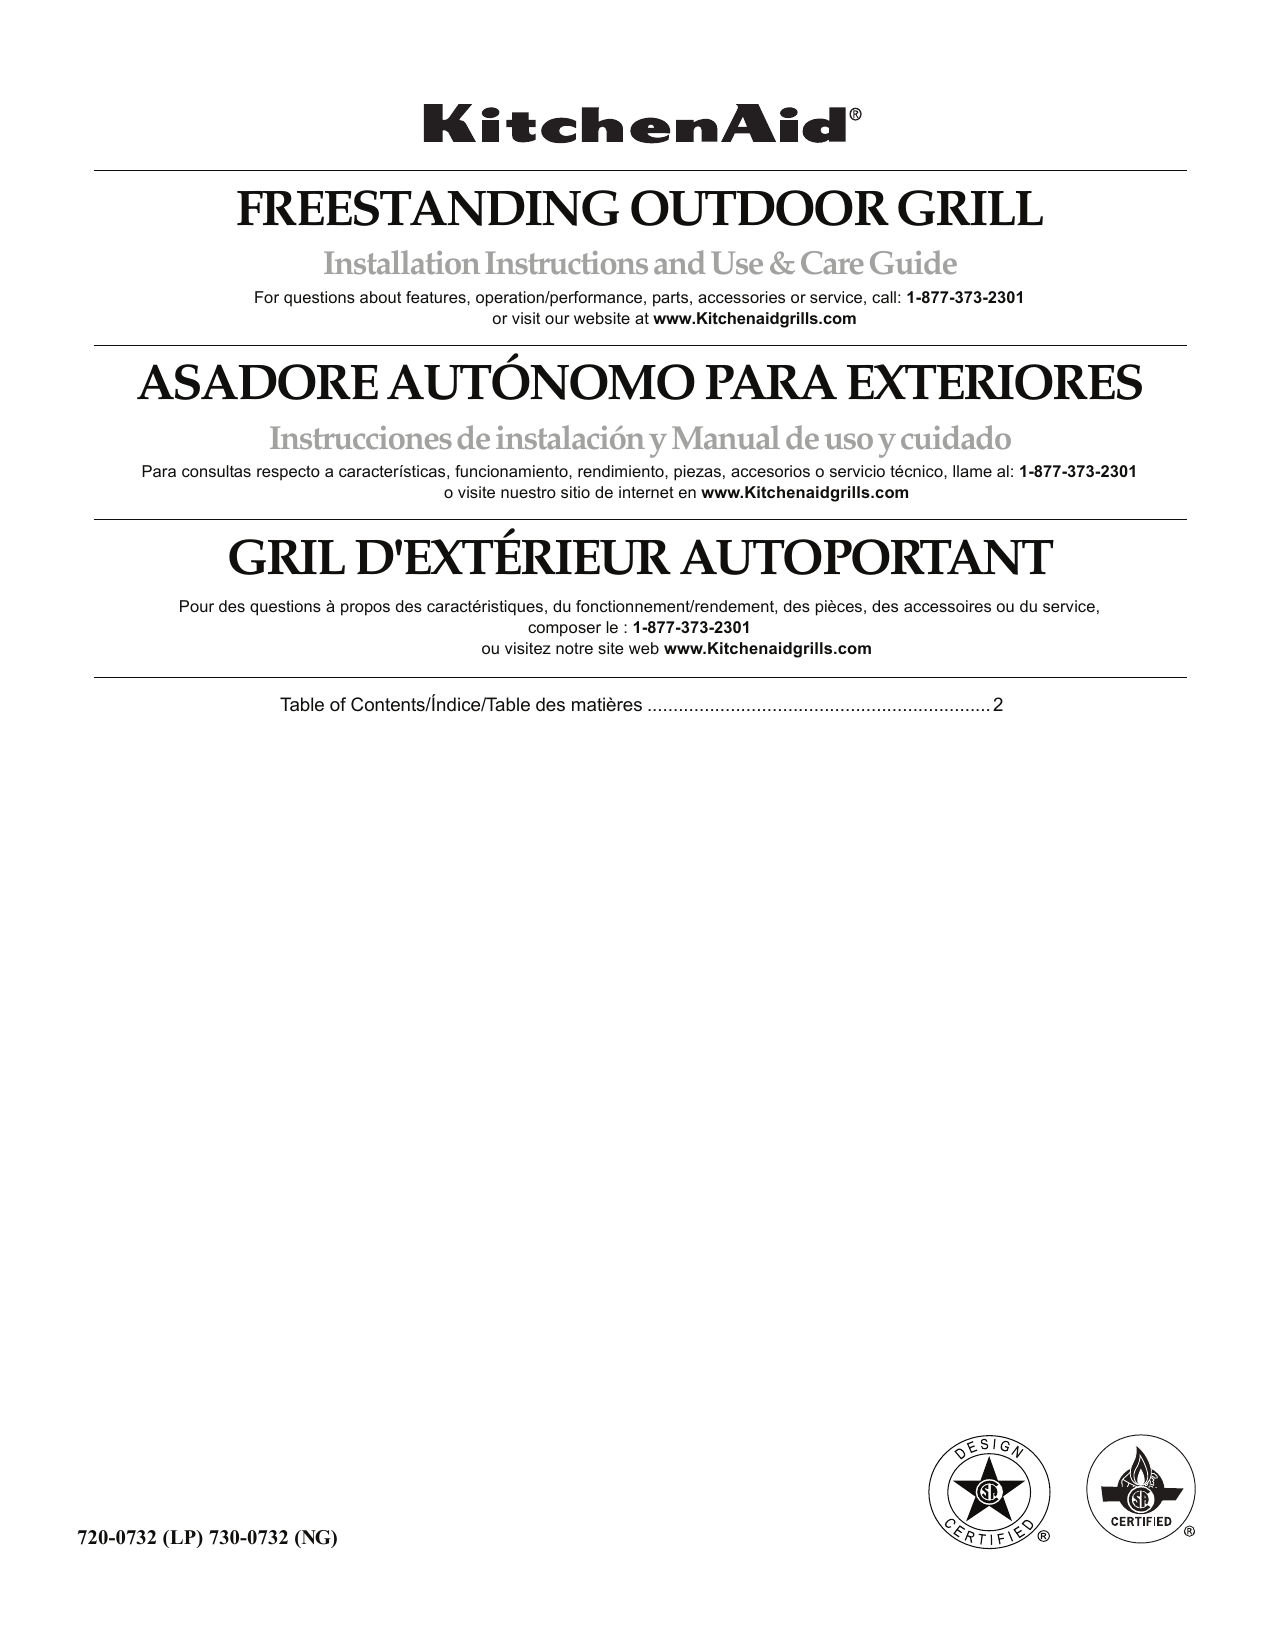 KitchenAid 720-0732 grill Owner Manual | Manualzz